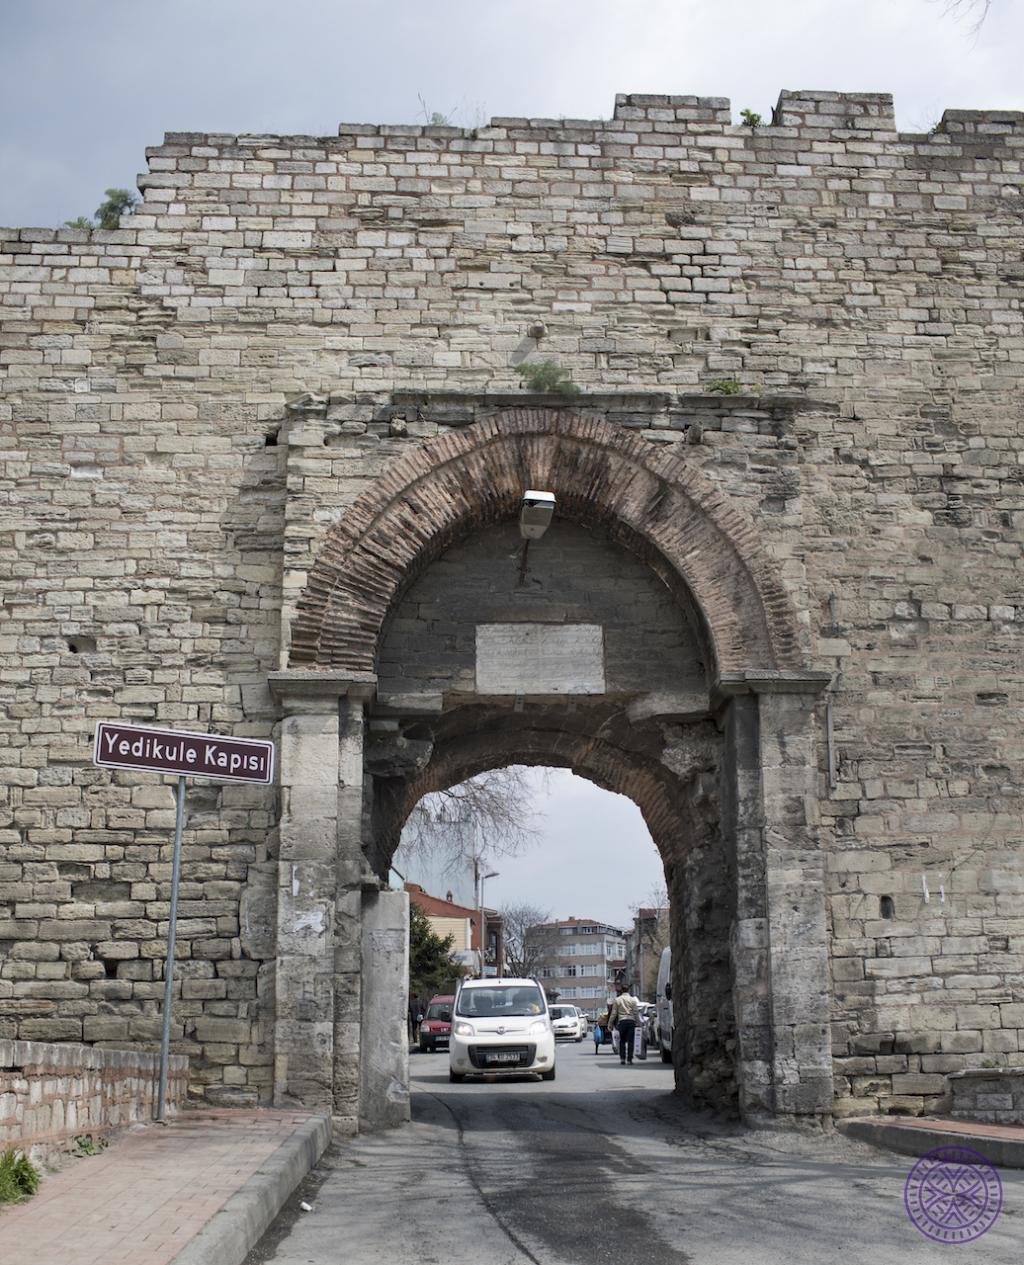 Yedikule Kapısı (gate) - Istanbul City Walls